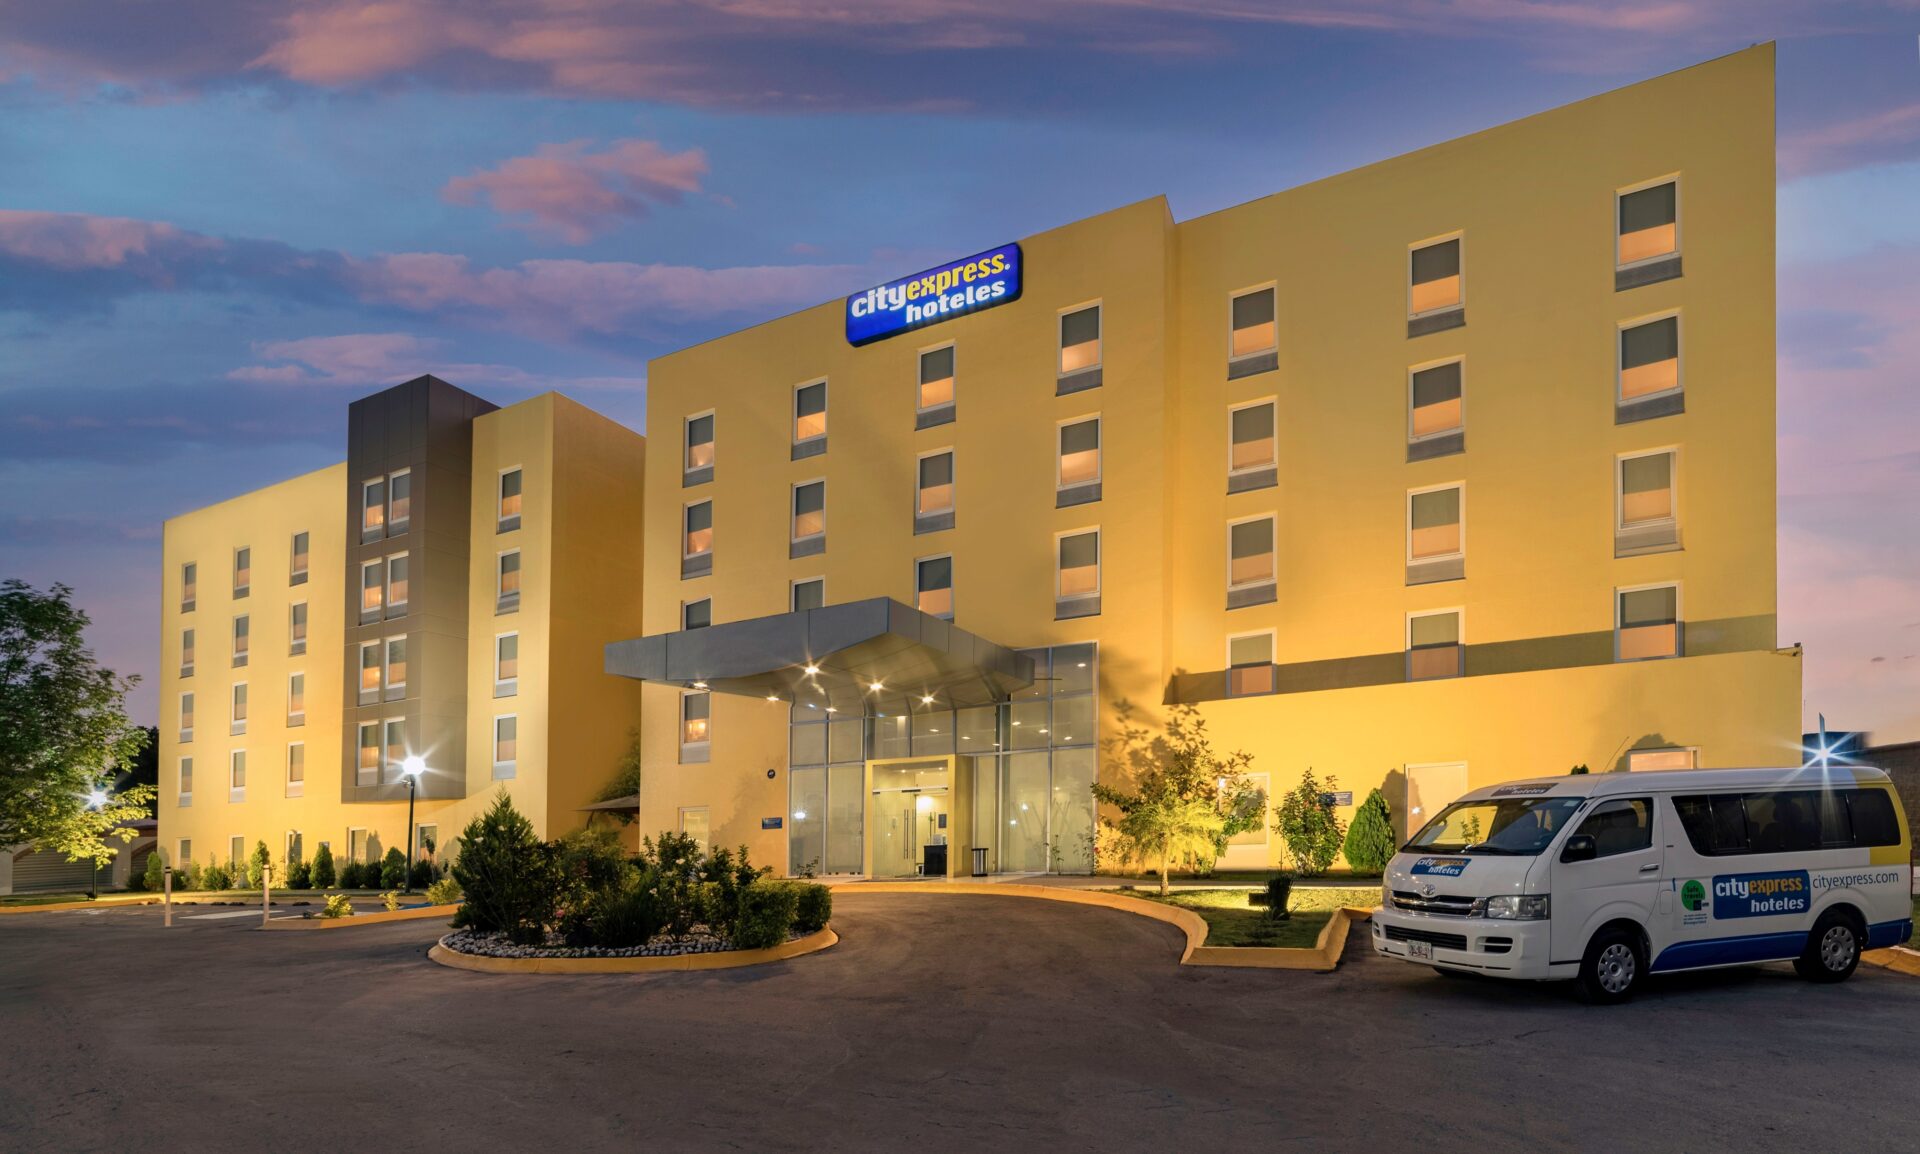 Hoteles City Express vende sus cinco marcas a Marriott por 100 mdd